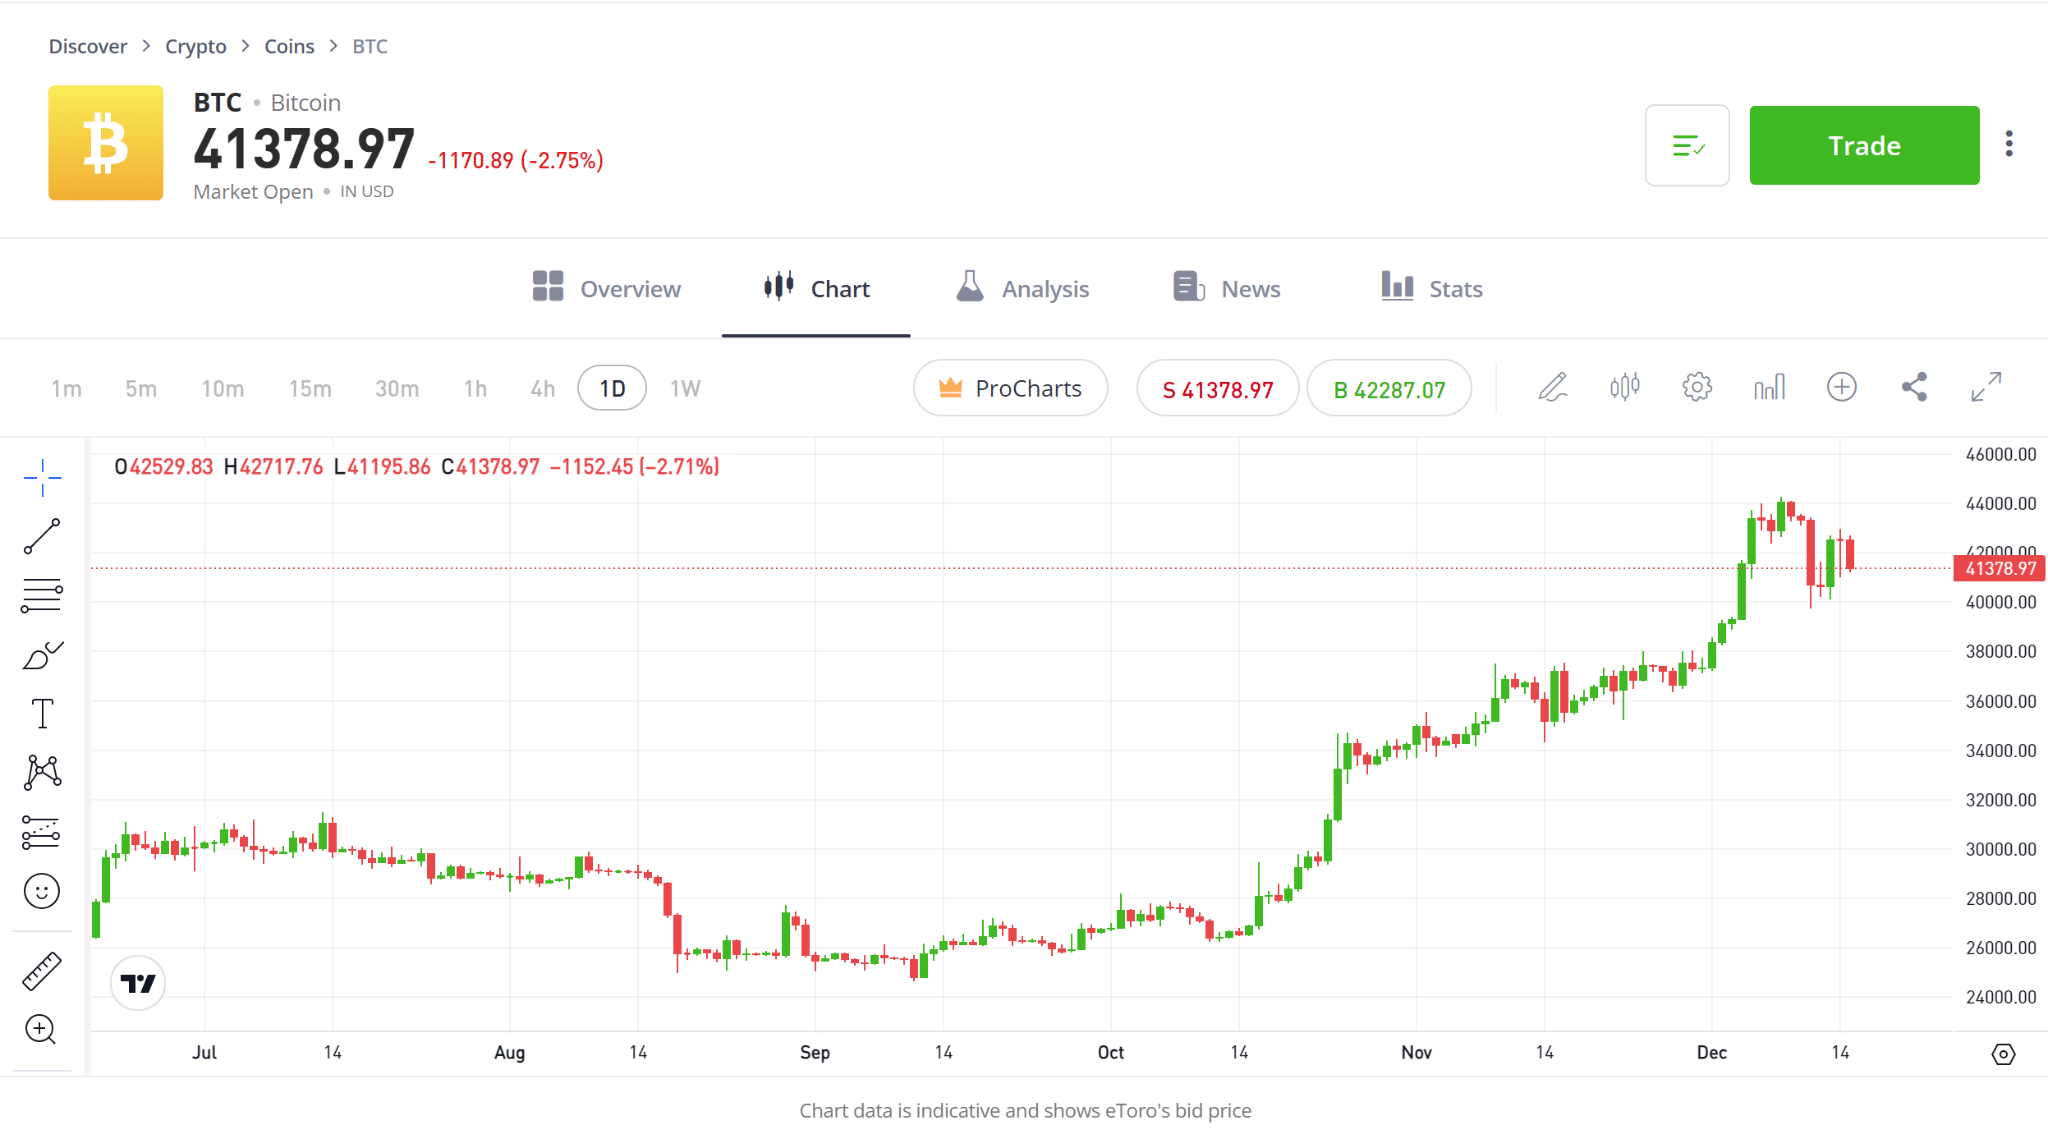 Bitcoin price movement